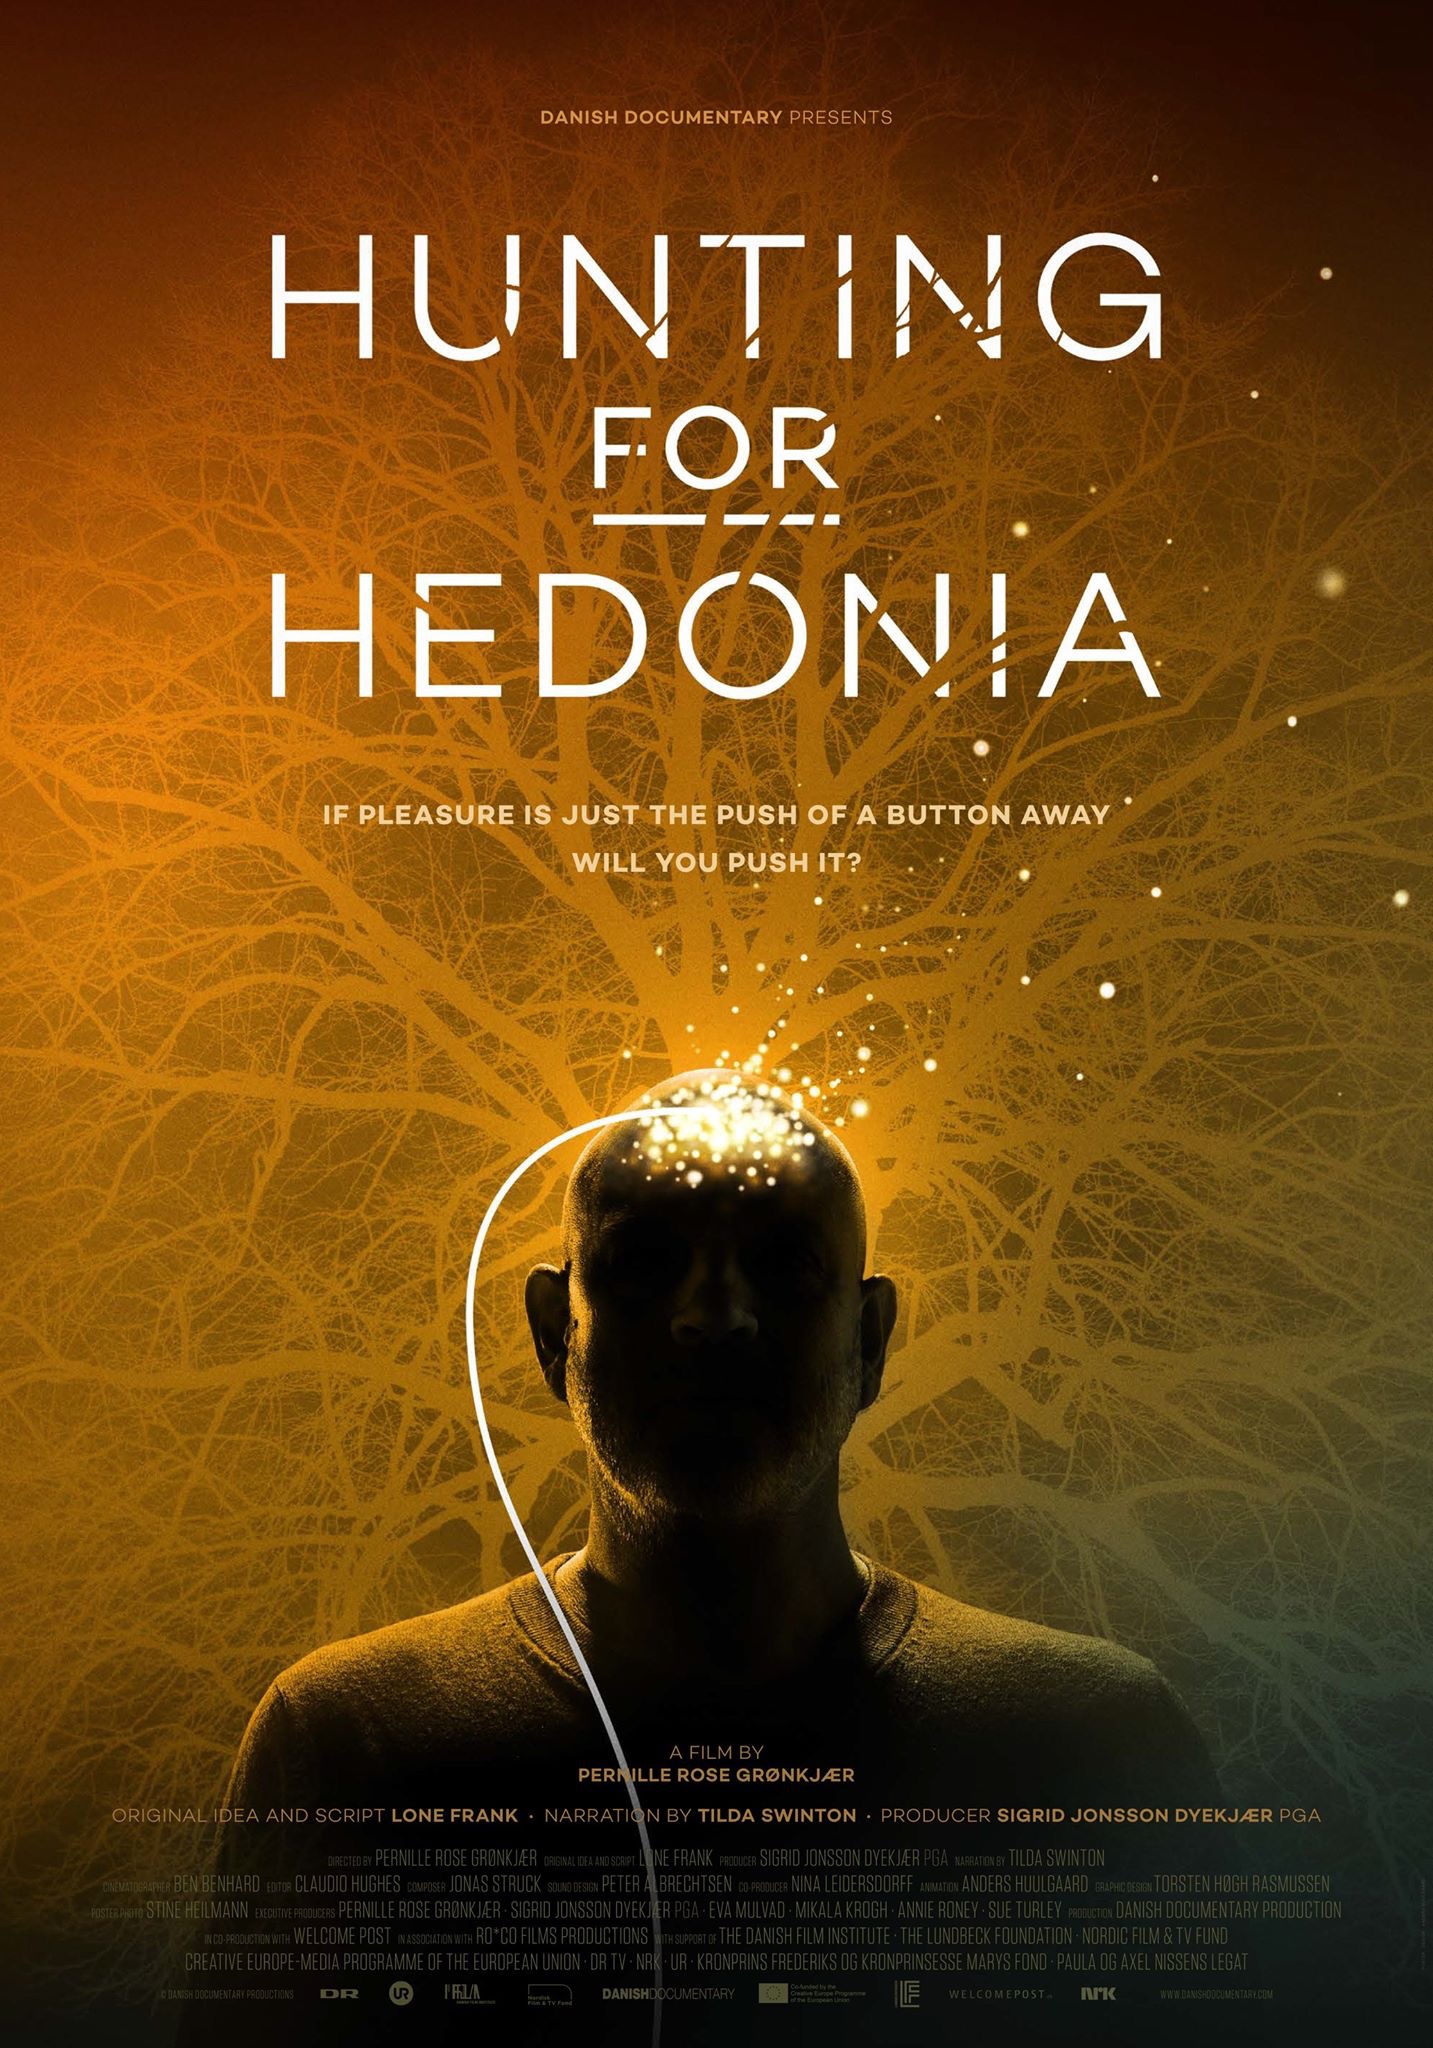 Nonton film Hunting for Hedonia layarkaca21 indoxx1 ganool online streaming terbaru